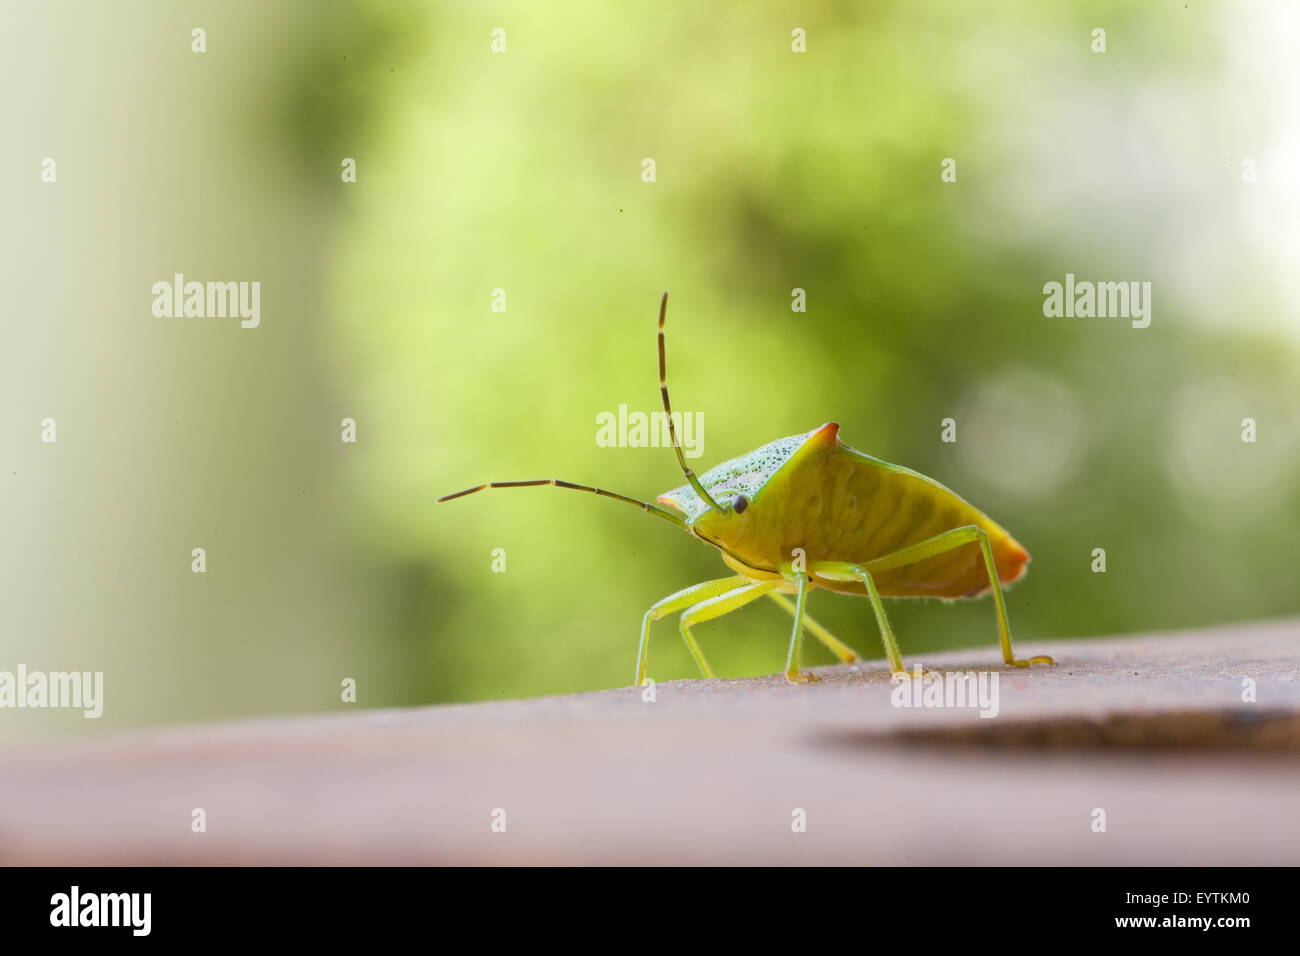 hawthorn shield bug, close-up Stock Photo